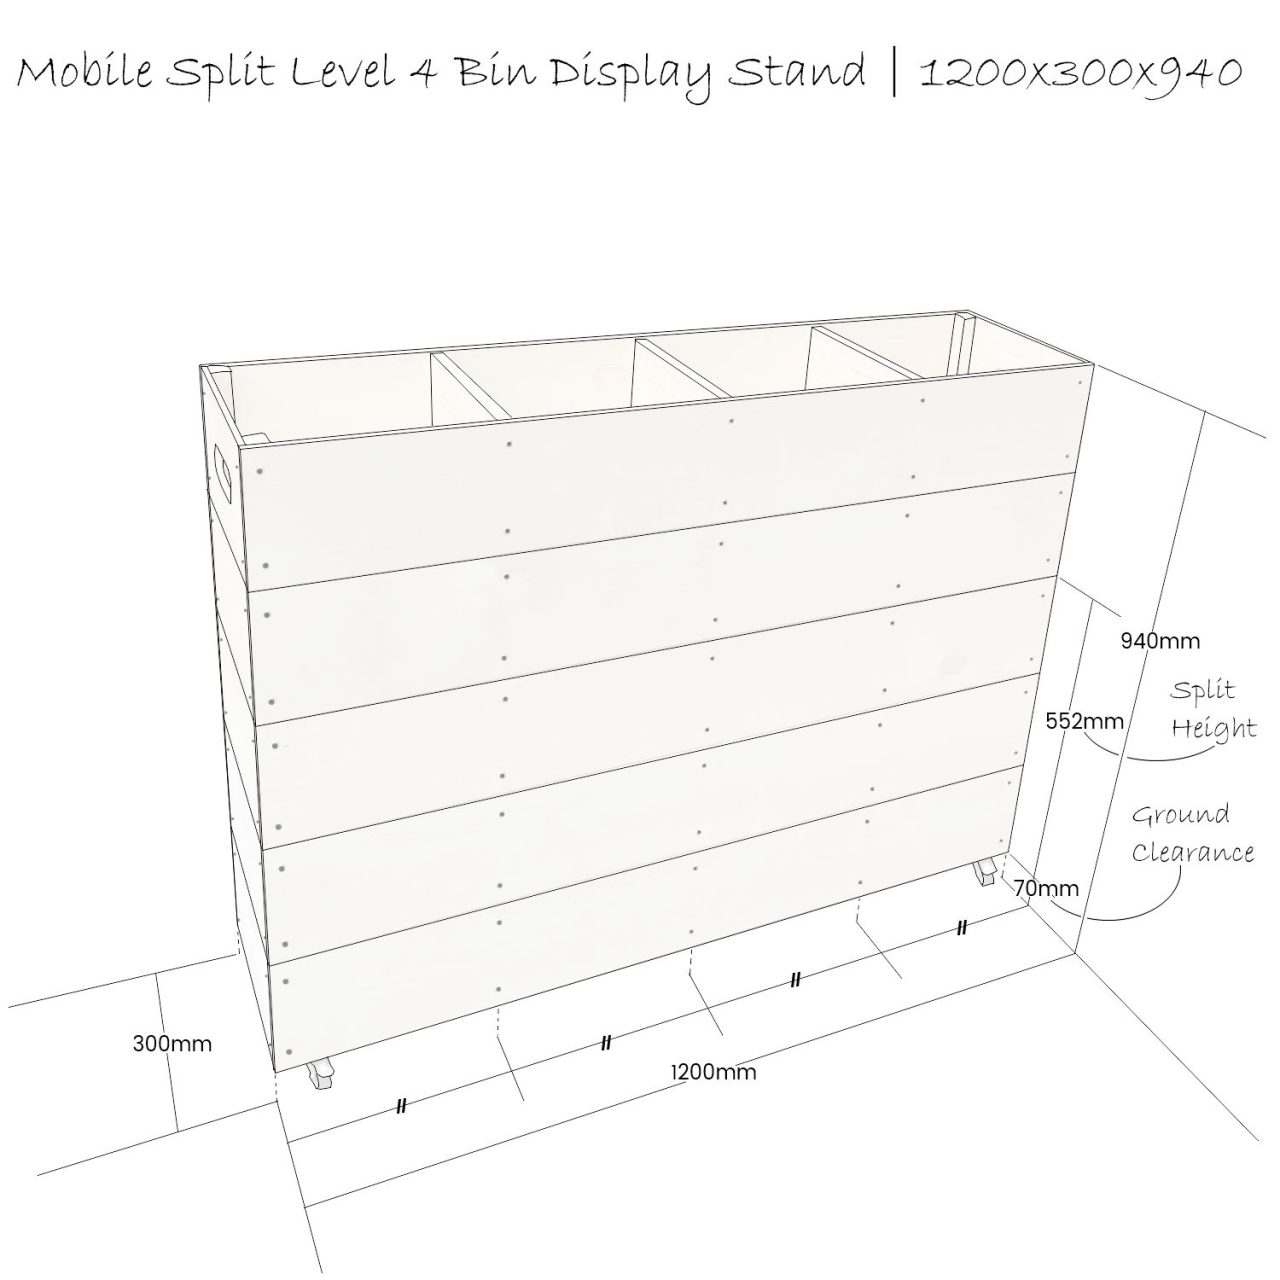 Mobile Split Level 4 Bin Impulse Merchandise Display Stand 1200x300x940 schematic